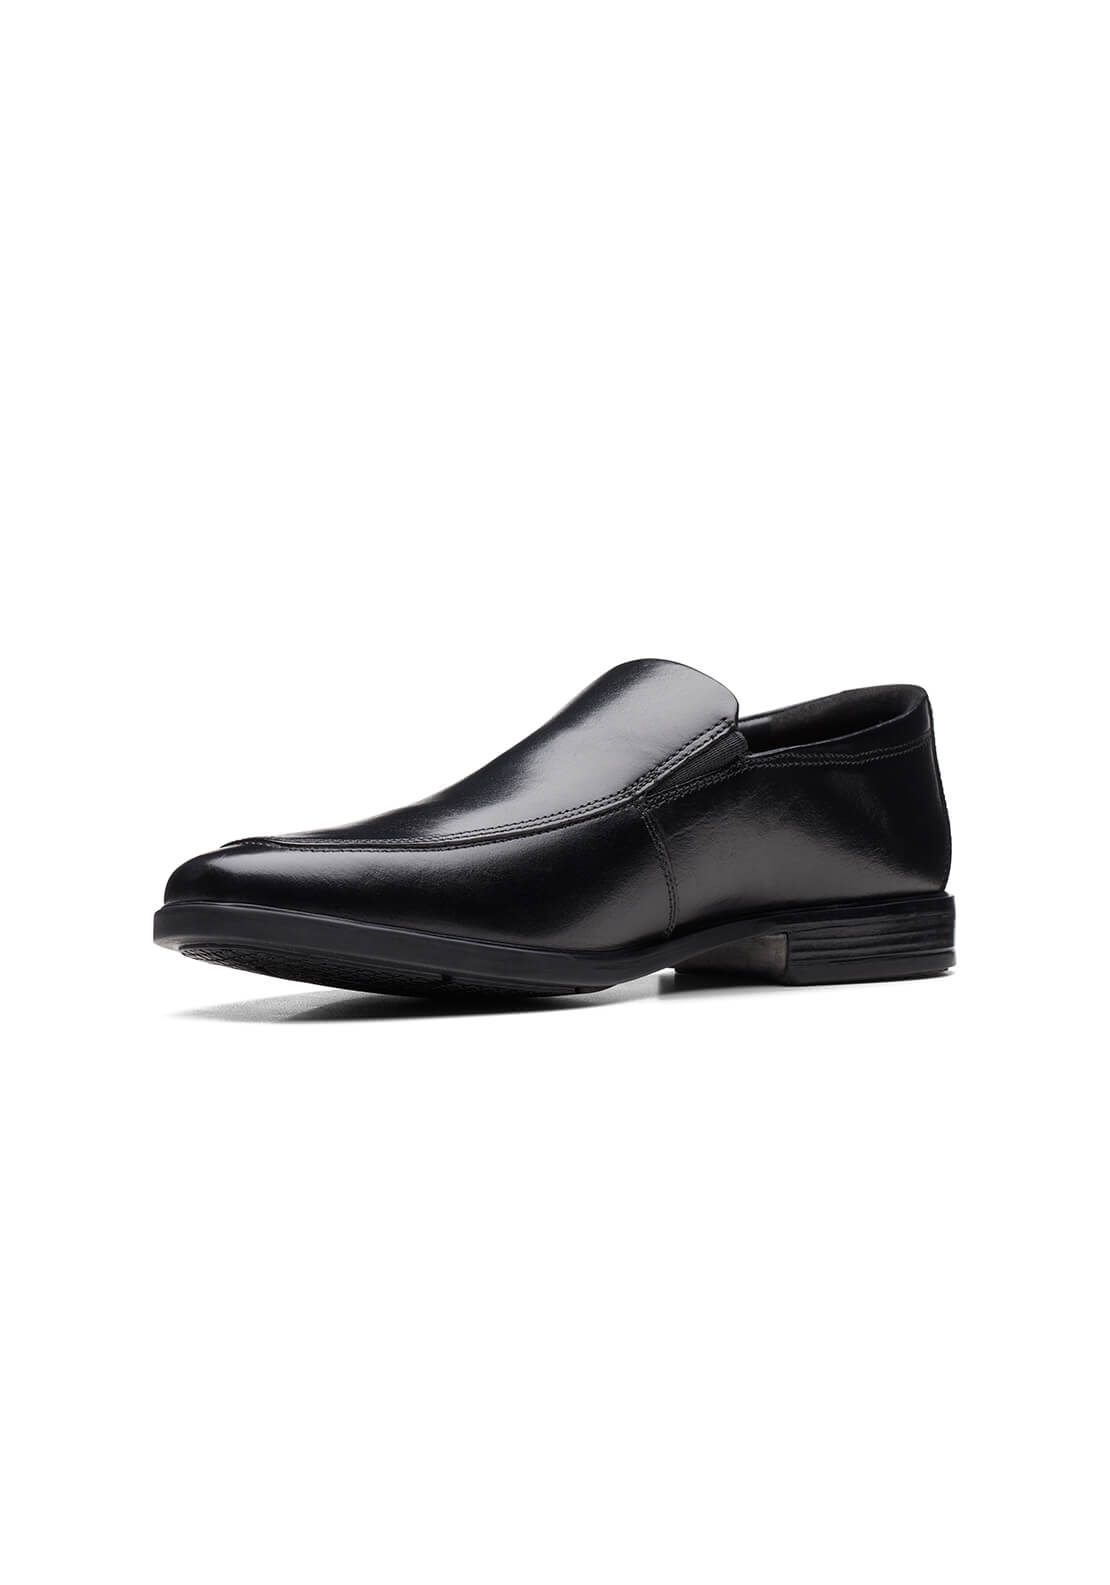 Clarks Howard Edge Formal Shoe - Black 2 Shaws Department Stores